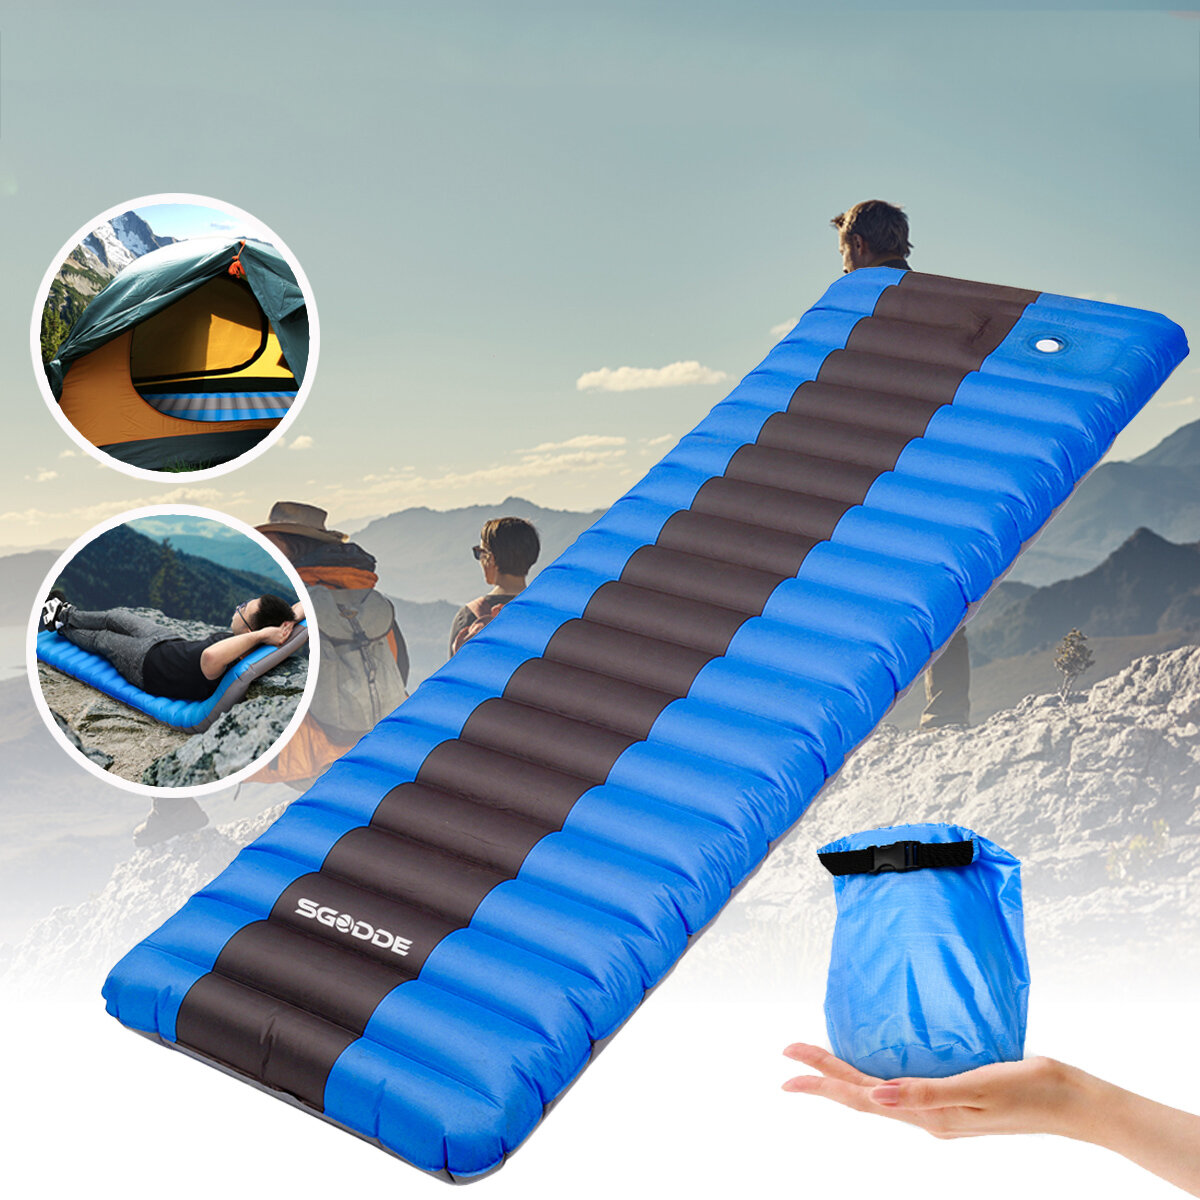 SGODDE Ultralight Waterproof Inflatable Mat Camping Mattress Sleeping Cushion Air Pad for Outdoor Camping Hiking Picnic